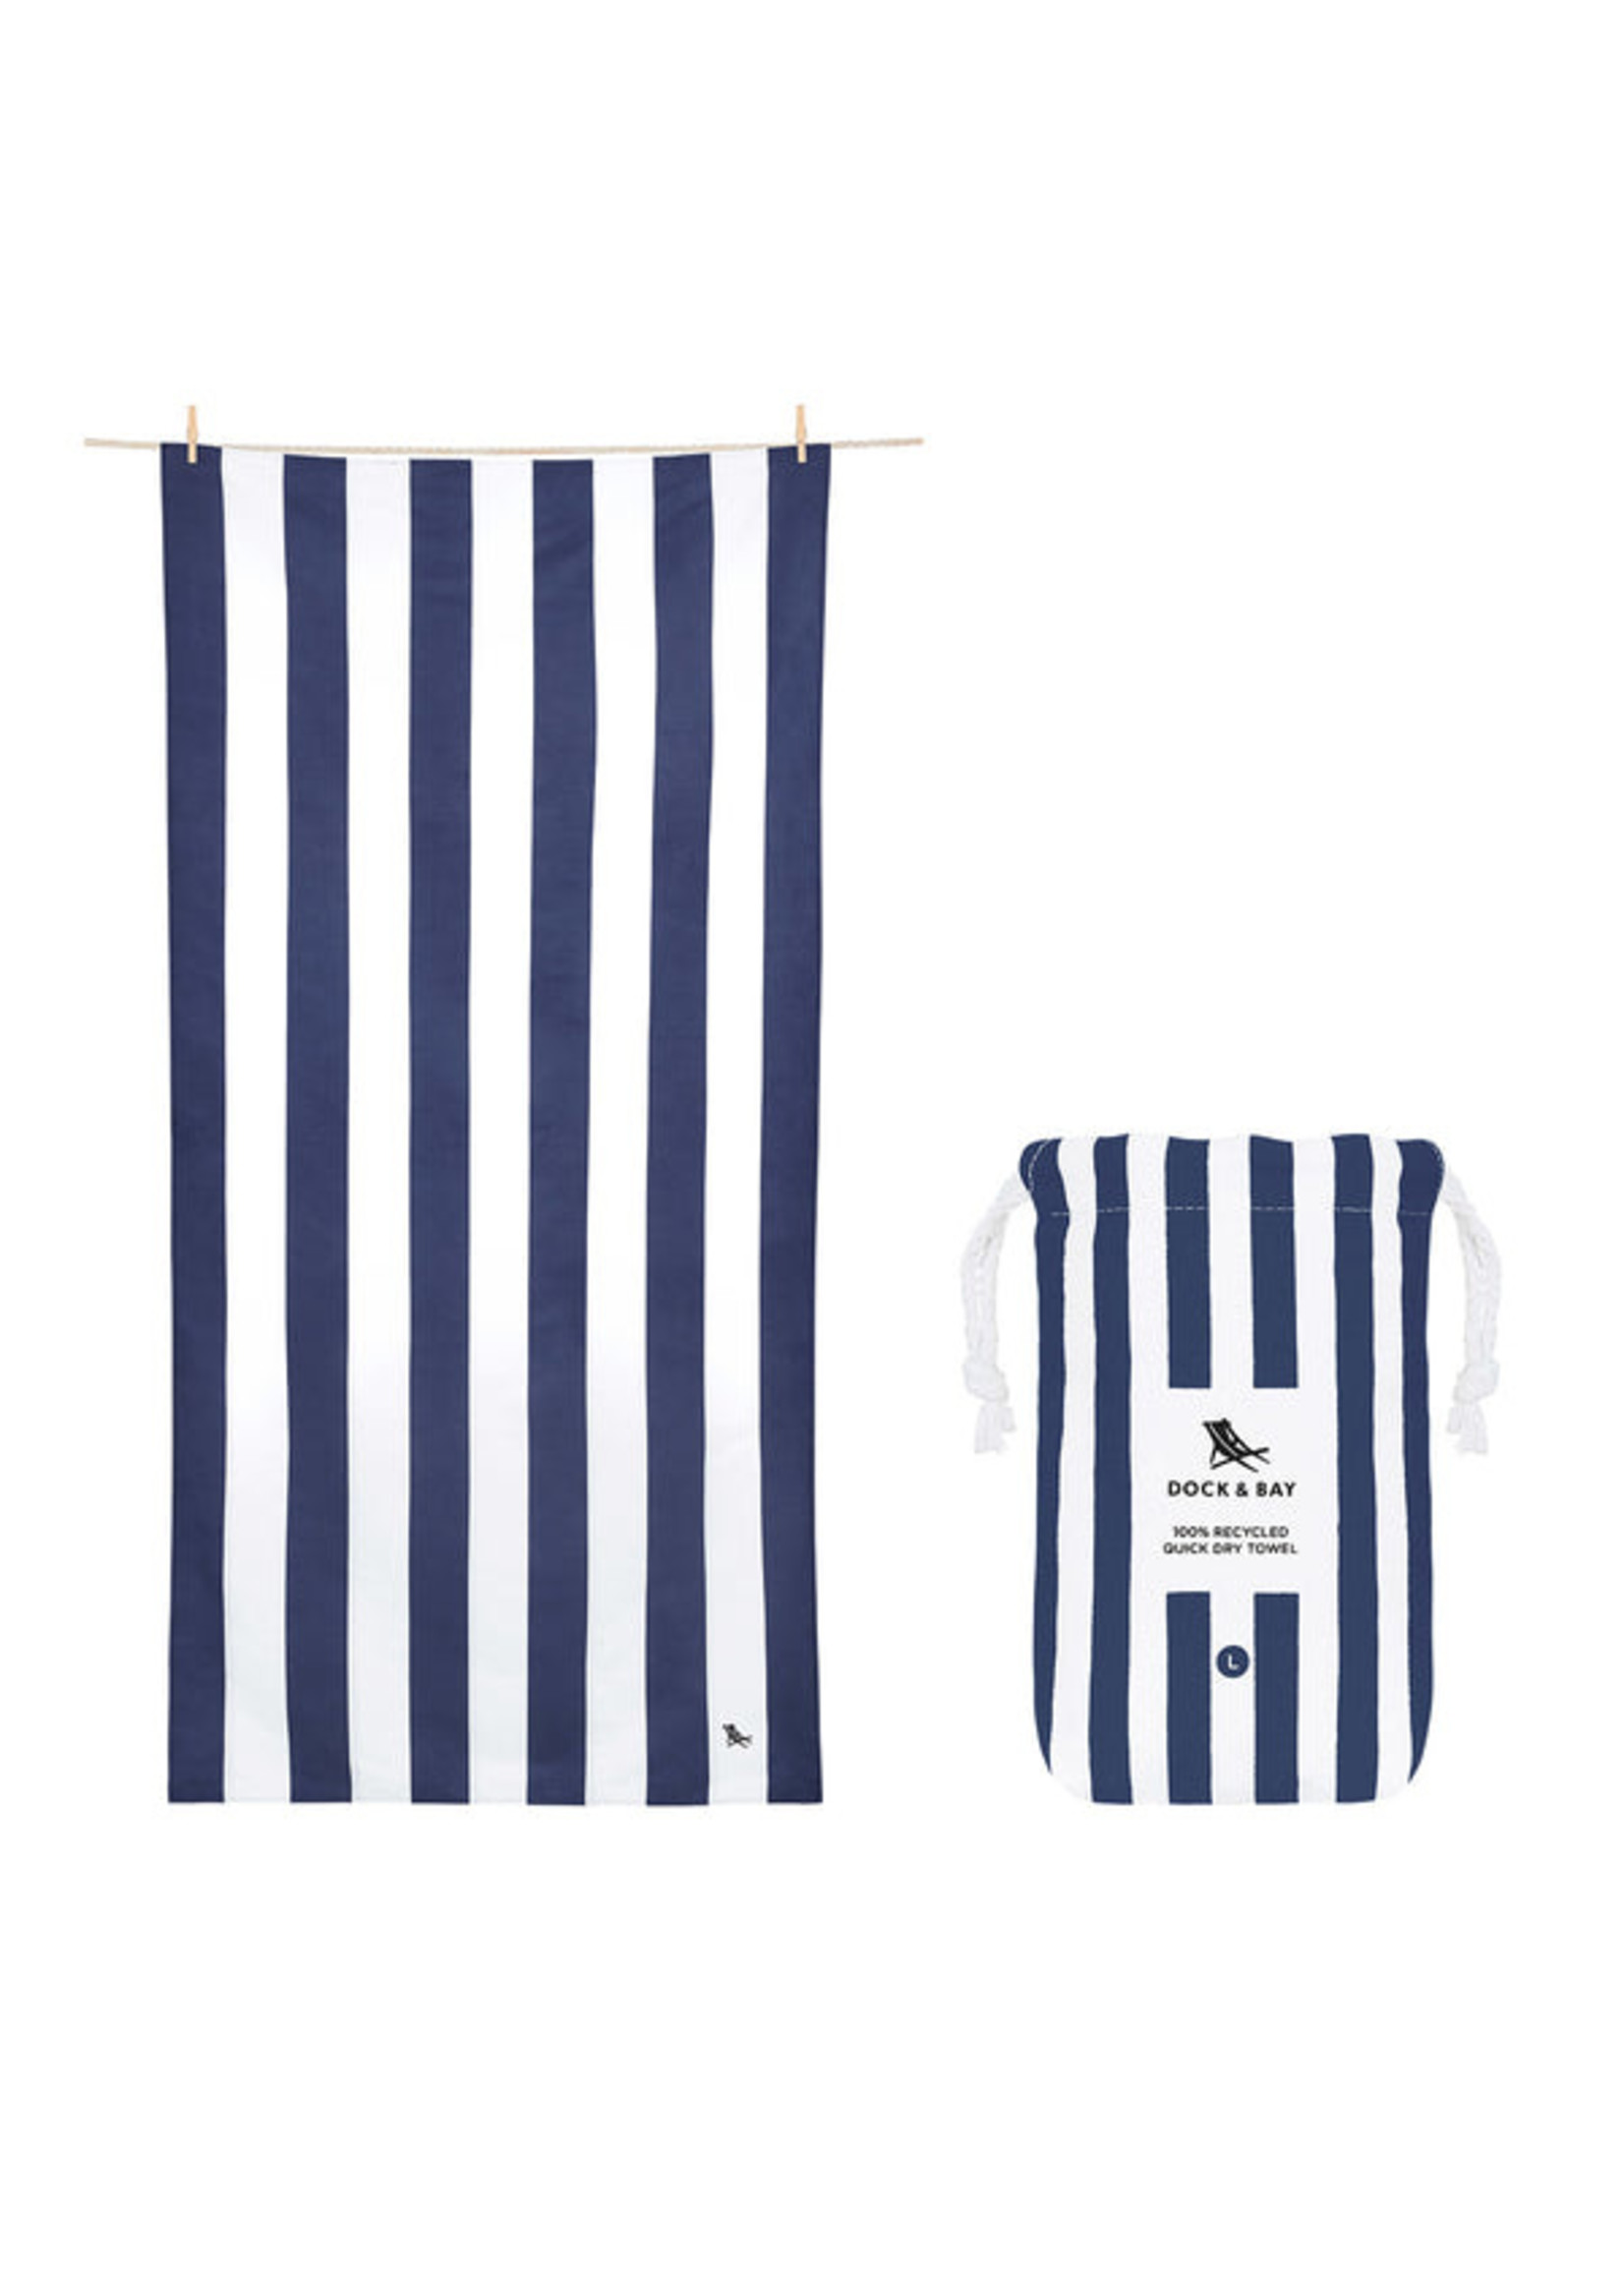 Dock & Bay Dock & Bay Whitsunday Blue Cooling Towels (27"x 13")